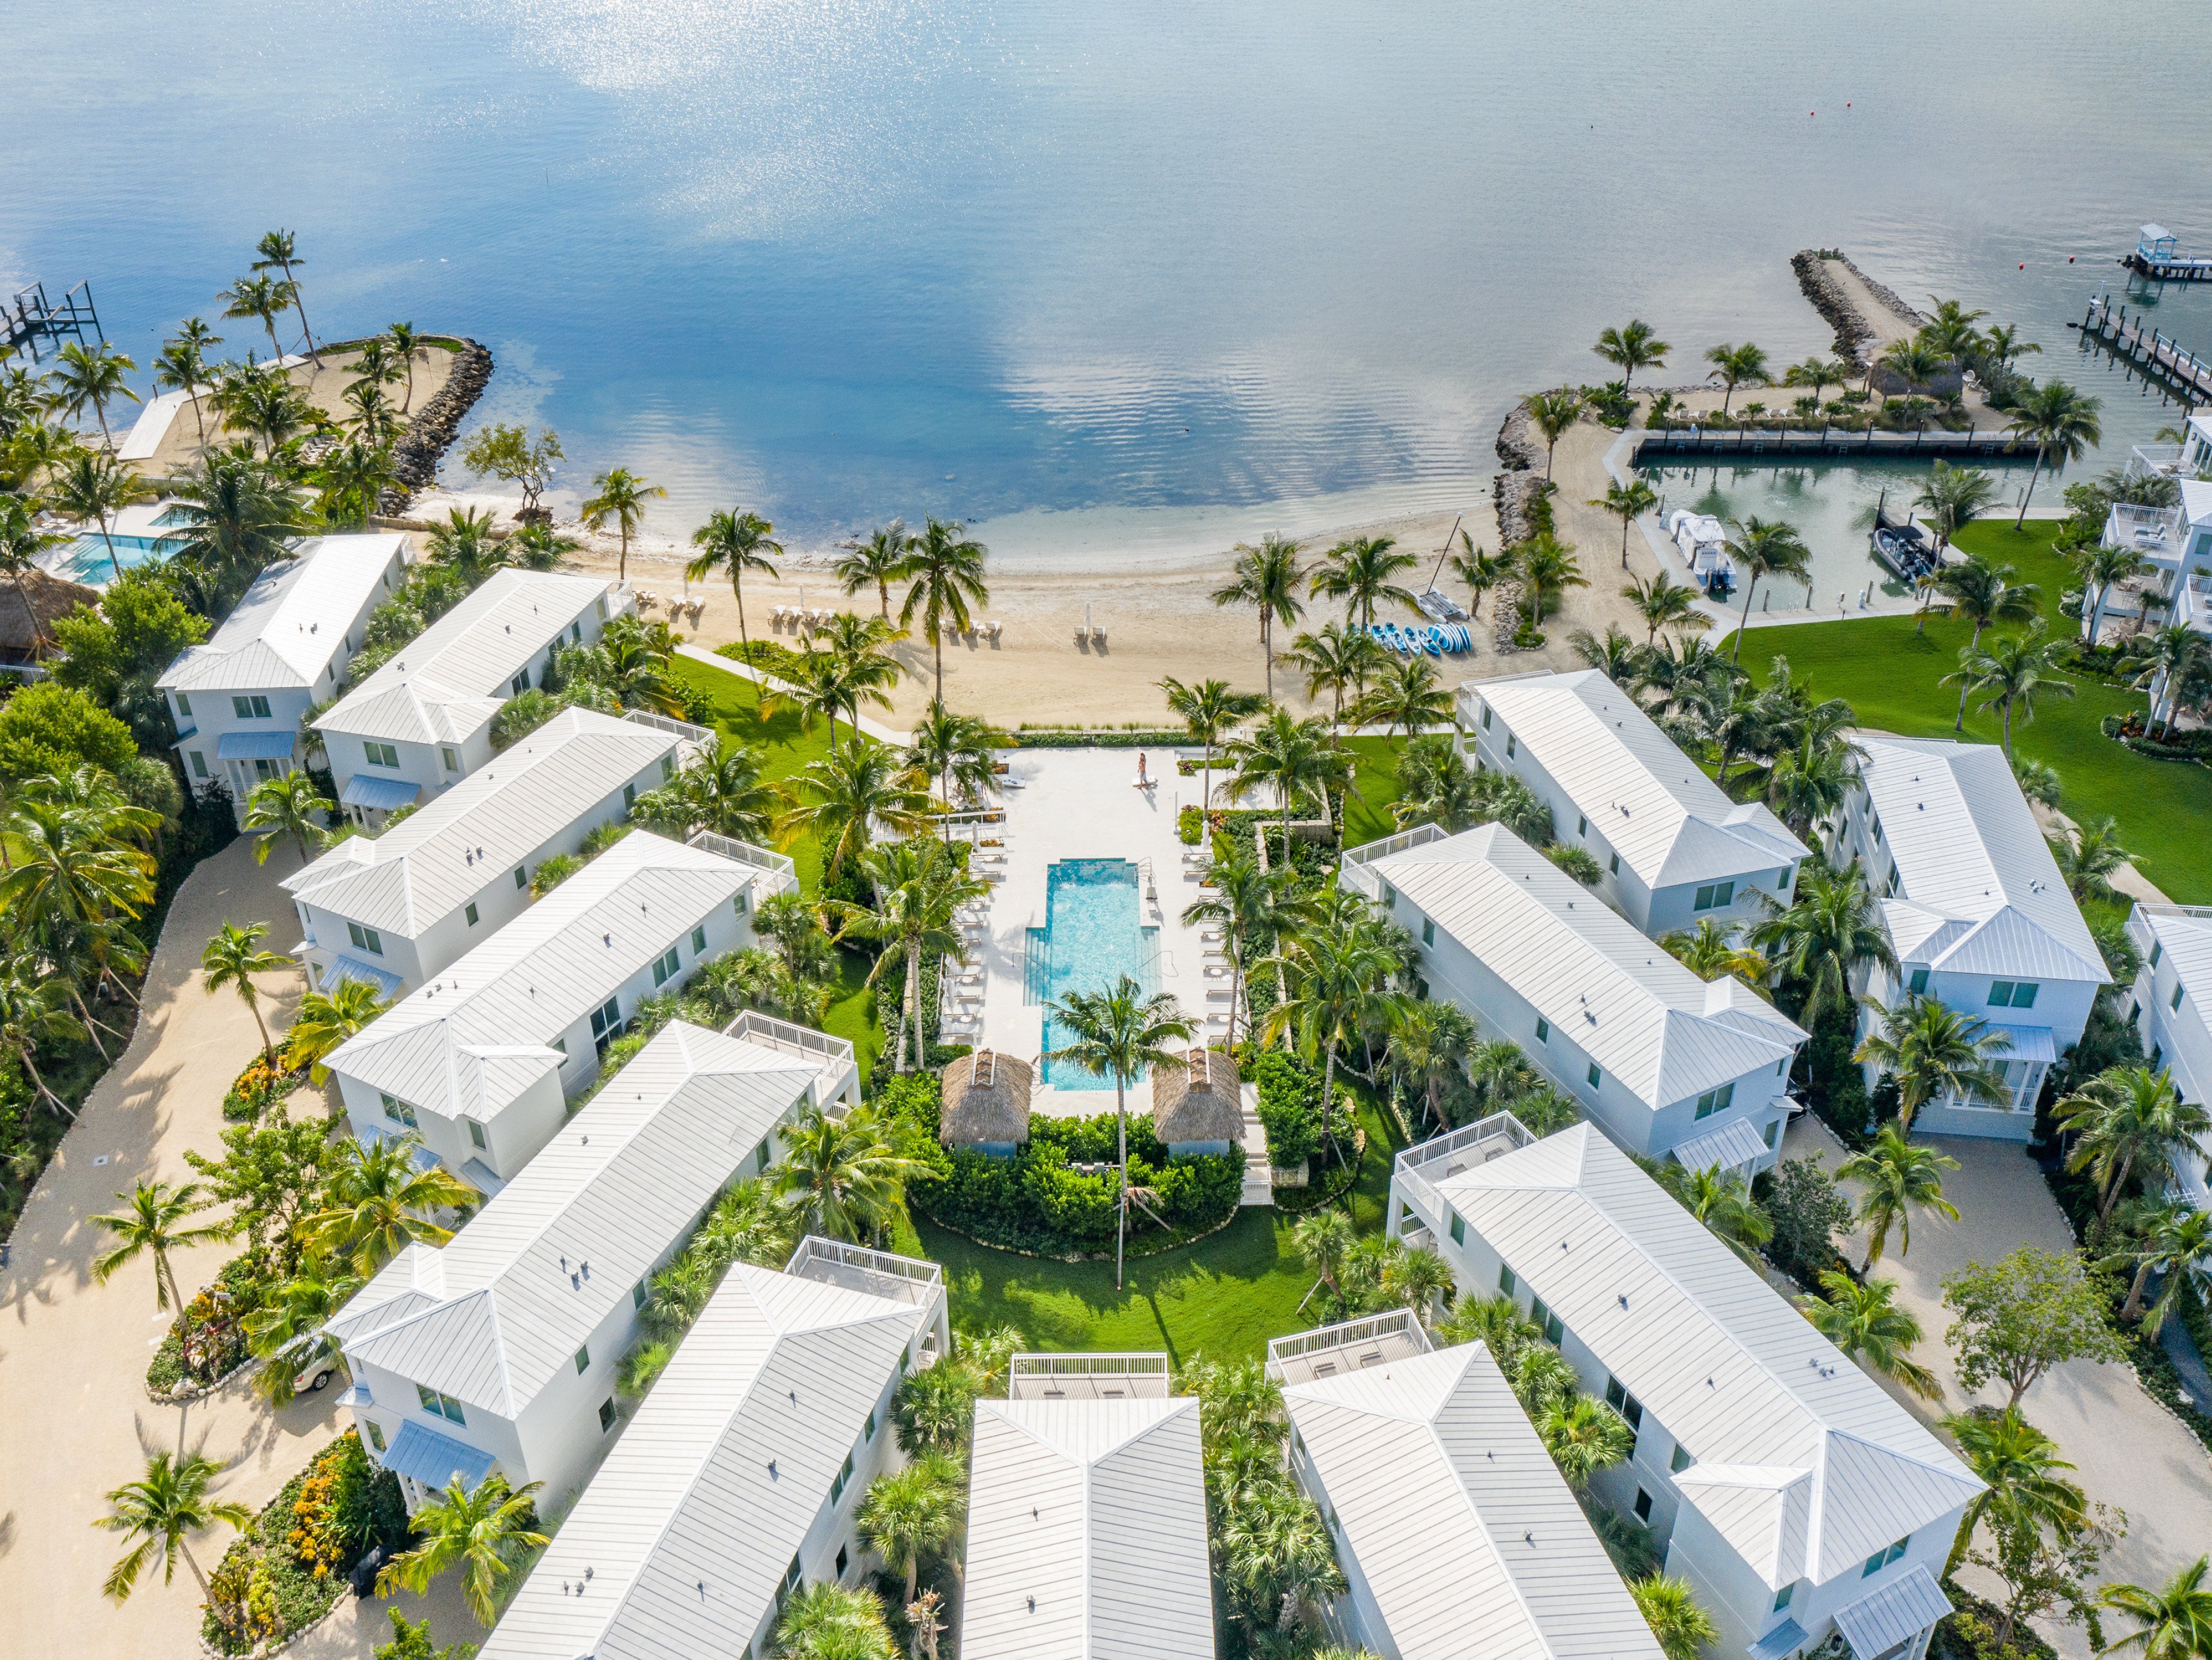 Islamorada Premium Villa 1 - Ocean Views - Islamorada vacation rentals with pool access